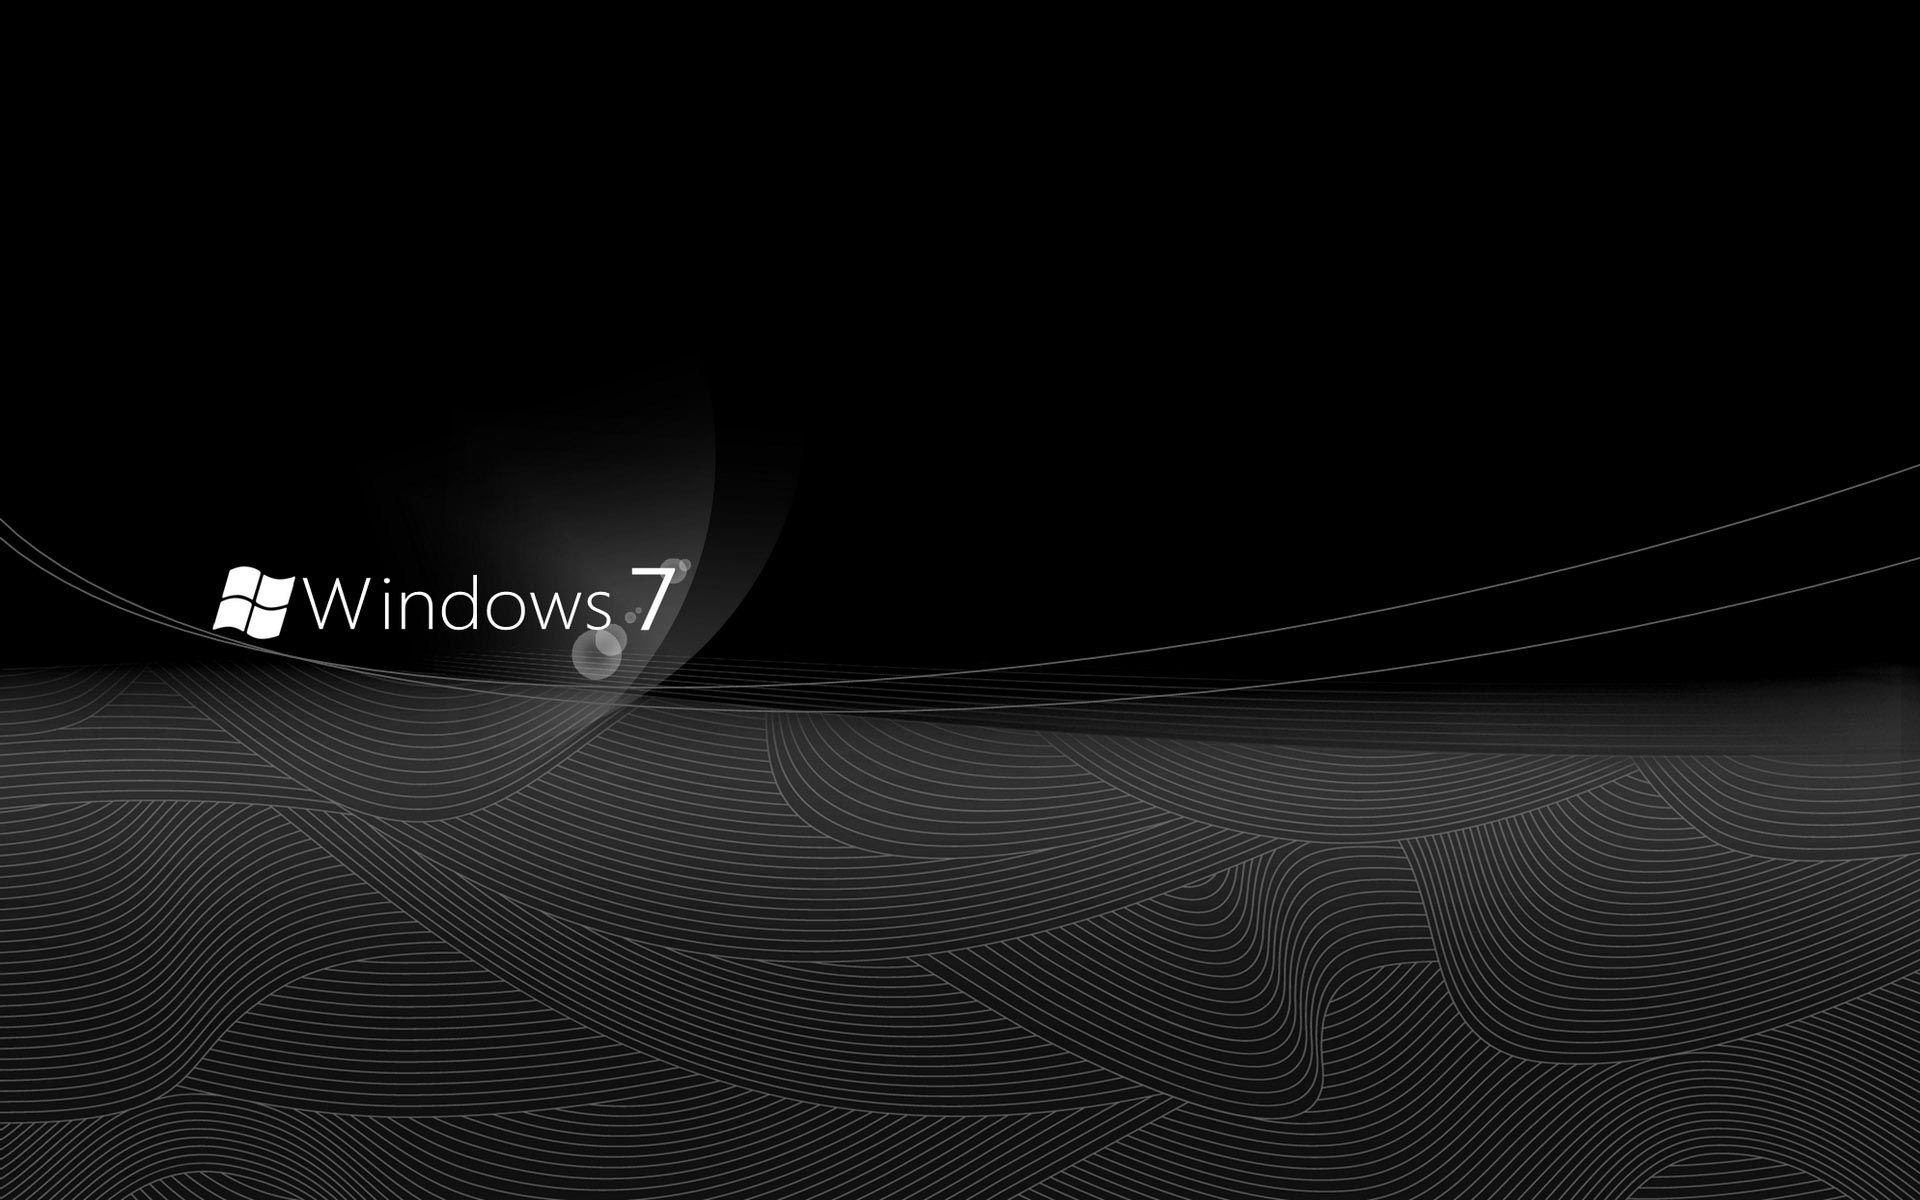 Windows 7 wallpaper black i8